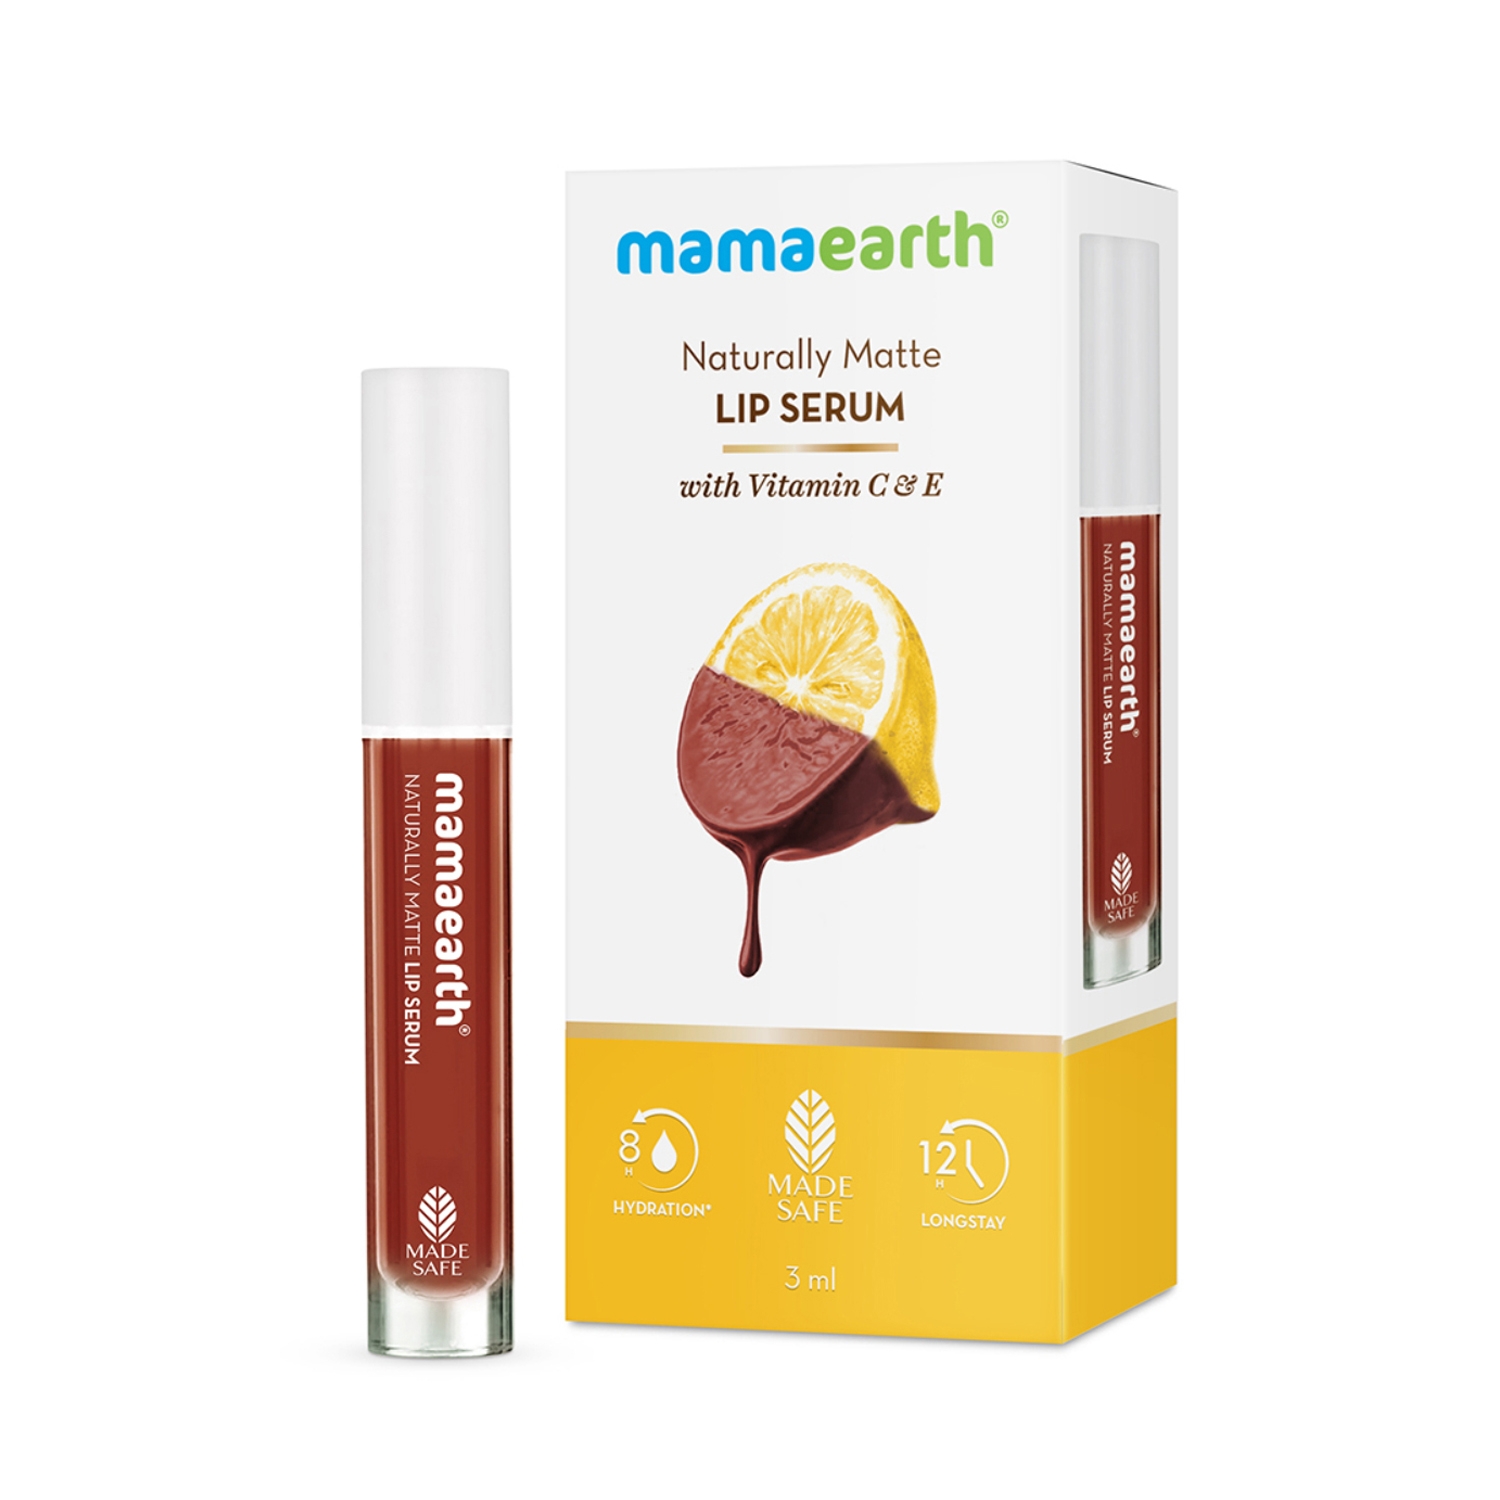 Mamaearth Naturally Matte Lip Serum With Vitamin C & E - Chocolate Truffle (3ml)